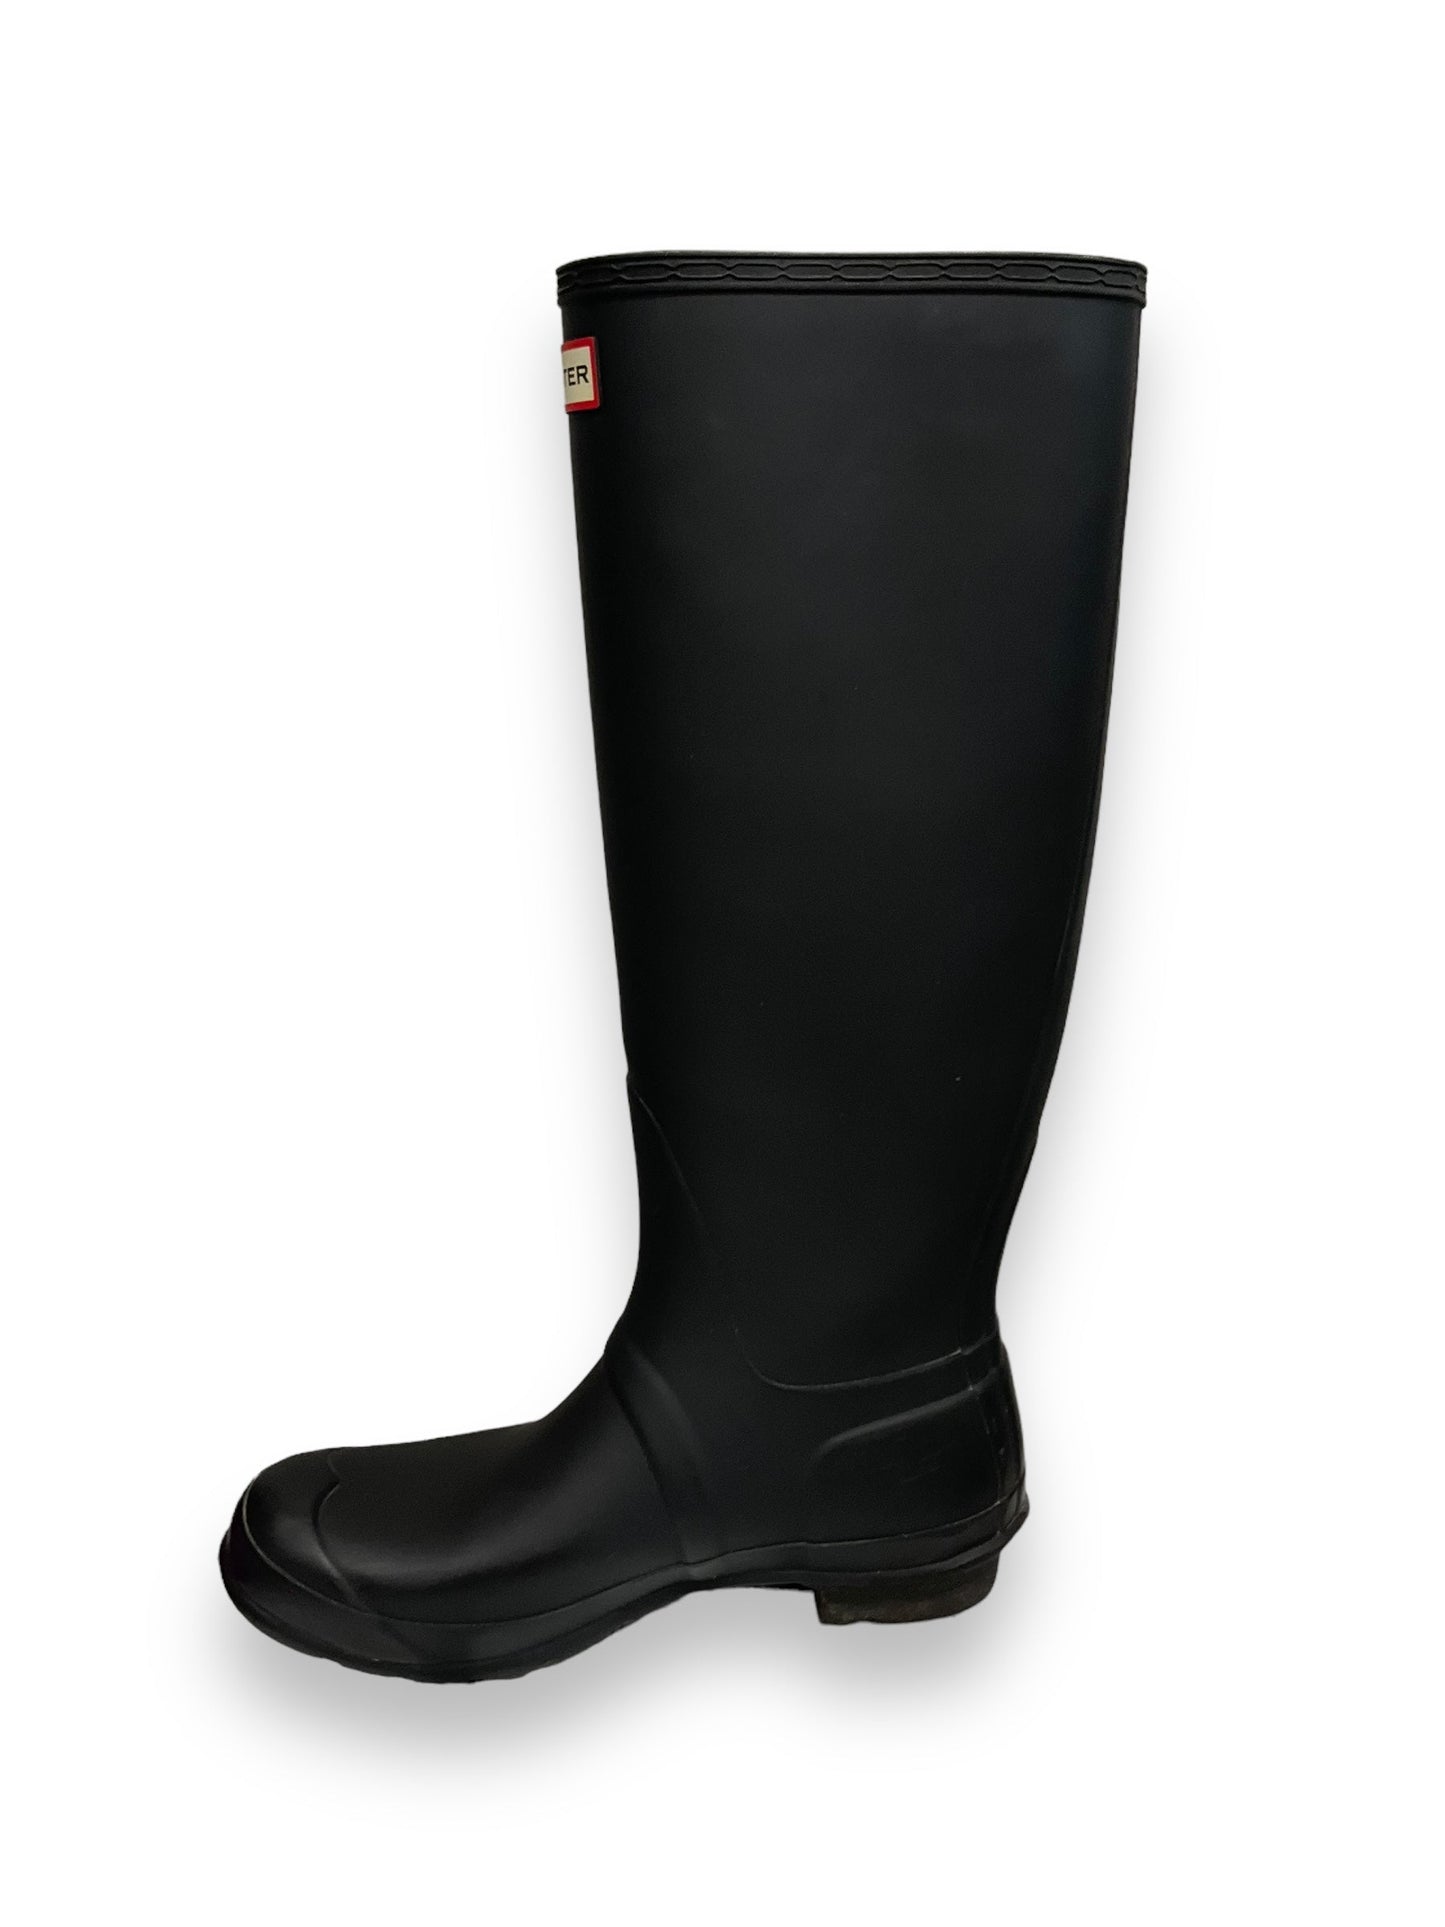 Black Boots Rain Hunter, Size 9